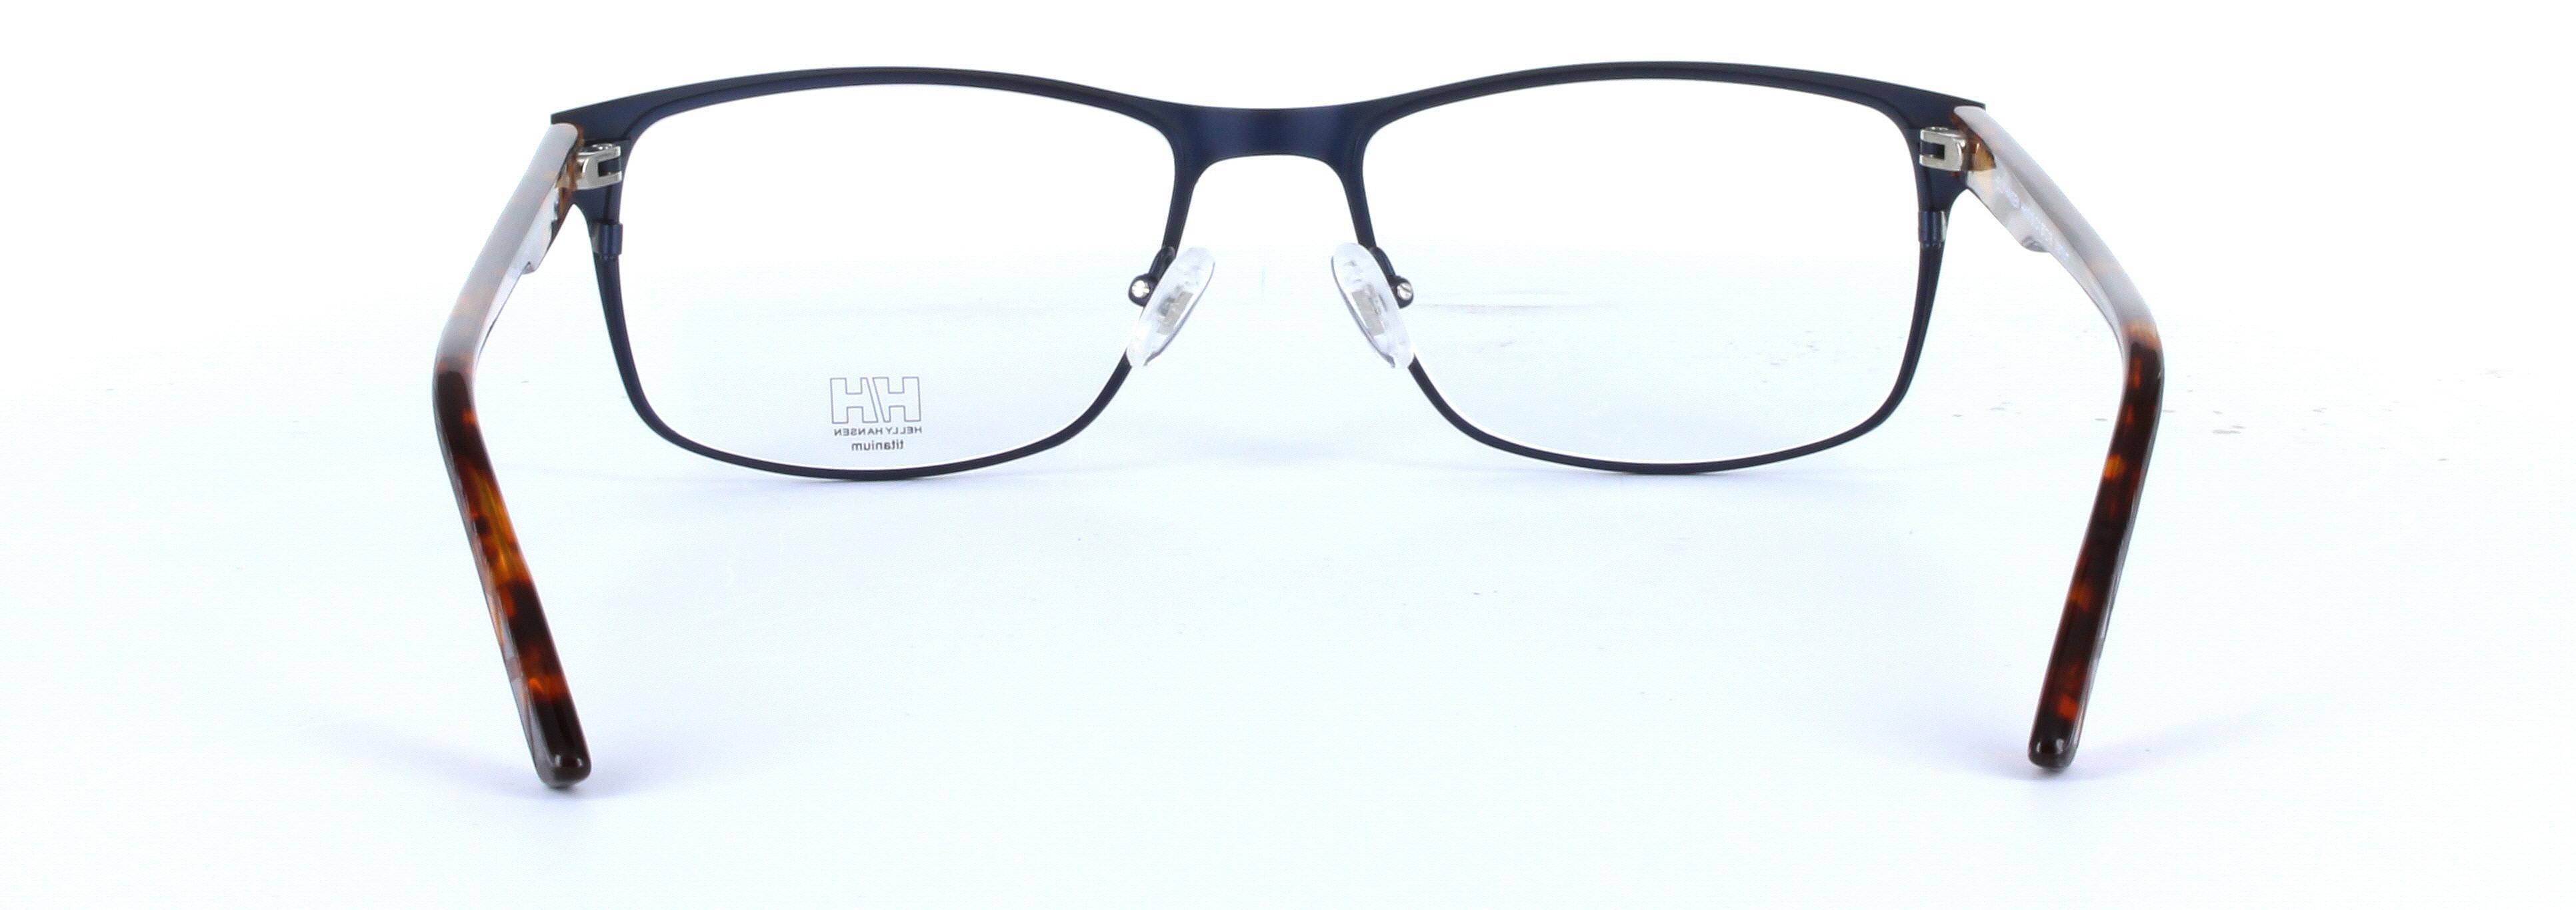 Helly Hansen HH 1019 Brown Full Rim Rectangular Square Metal Glasses - Image View 3